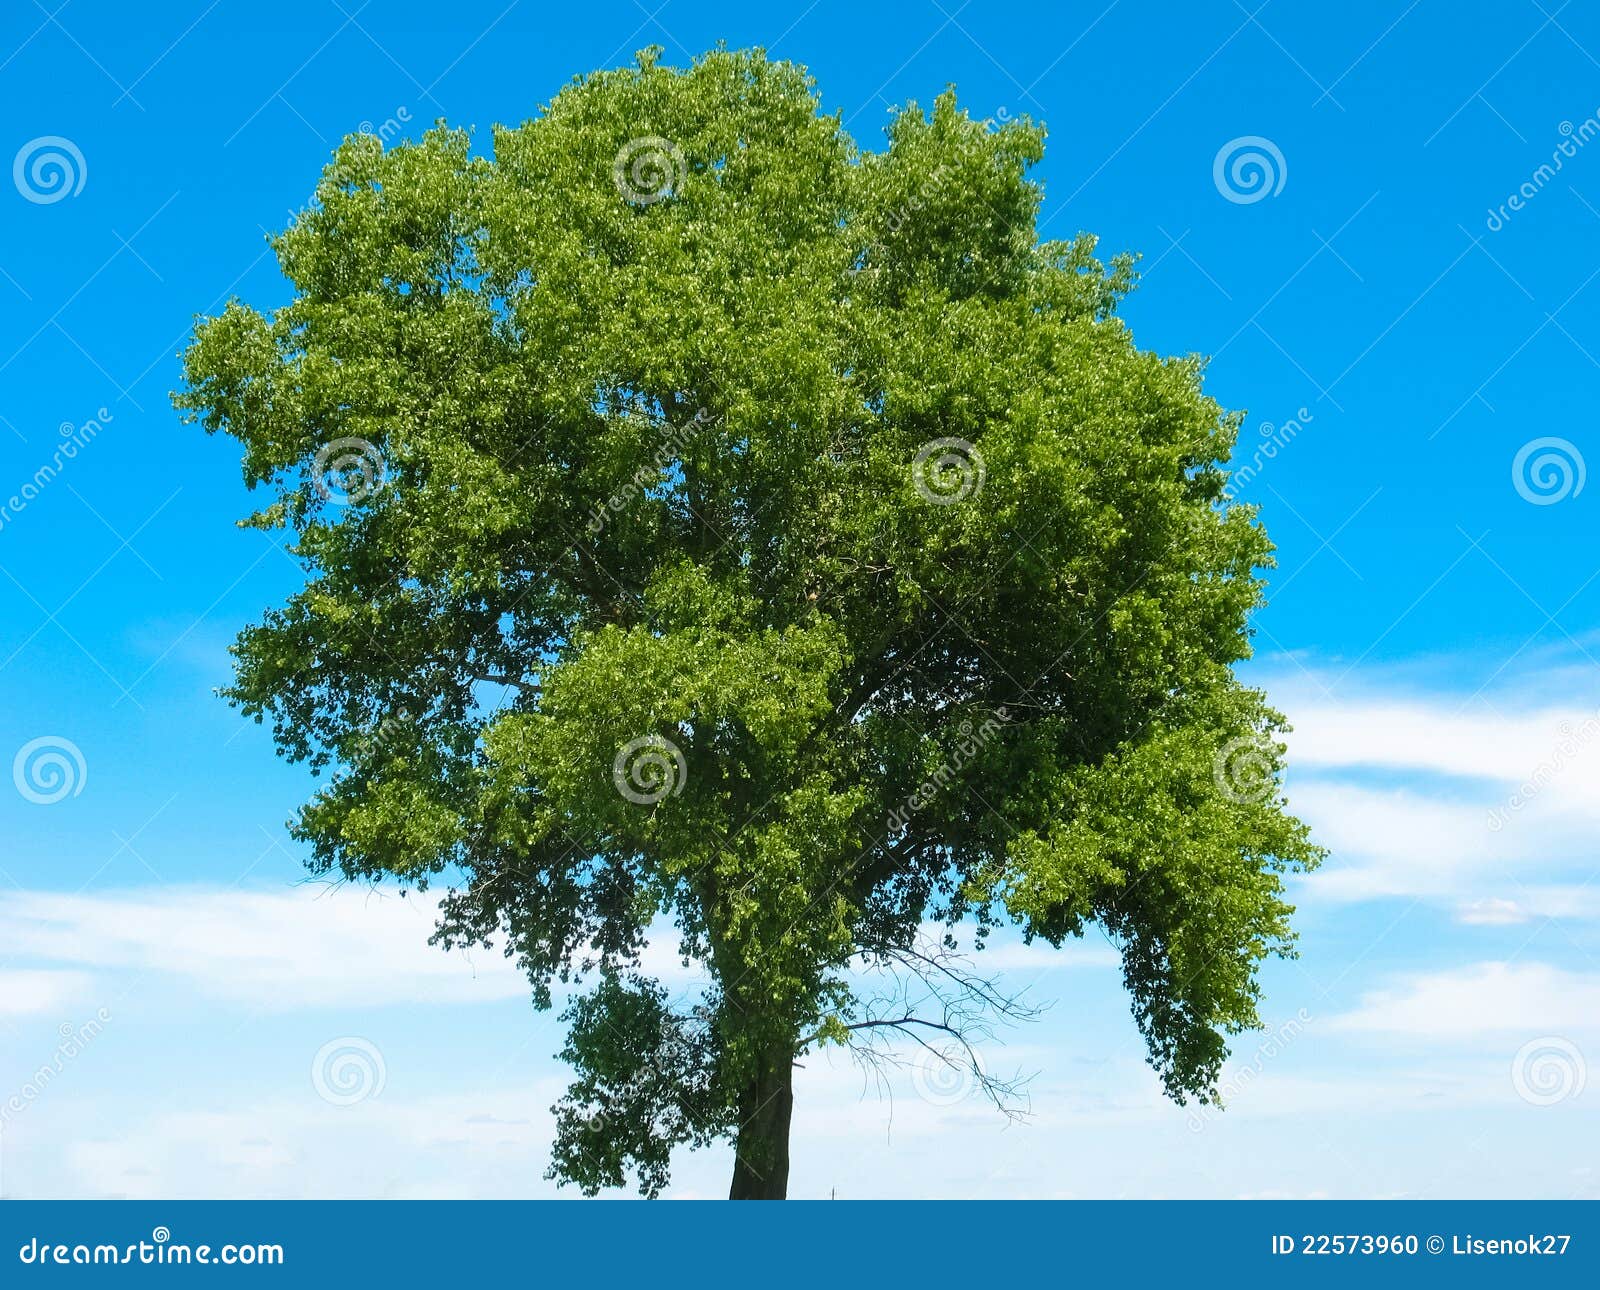 crone of tree